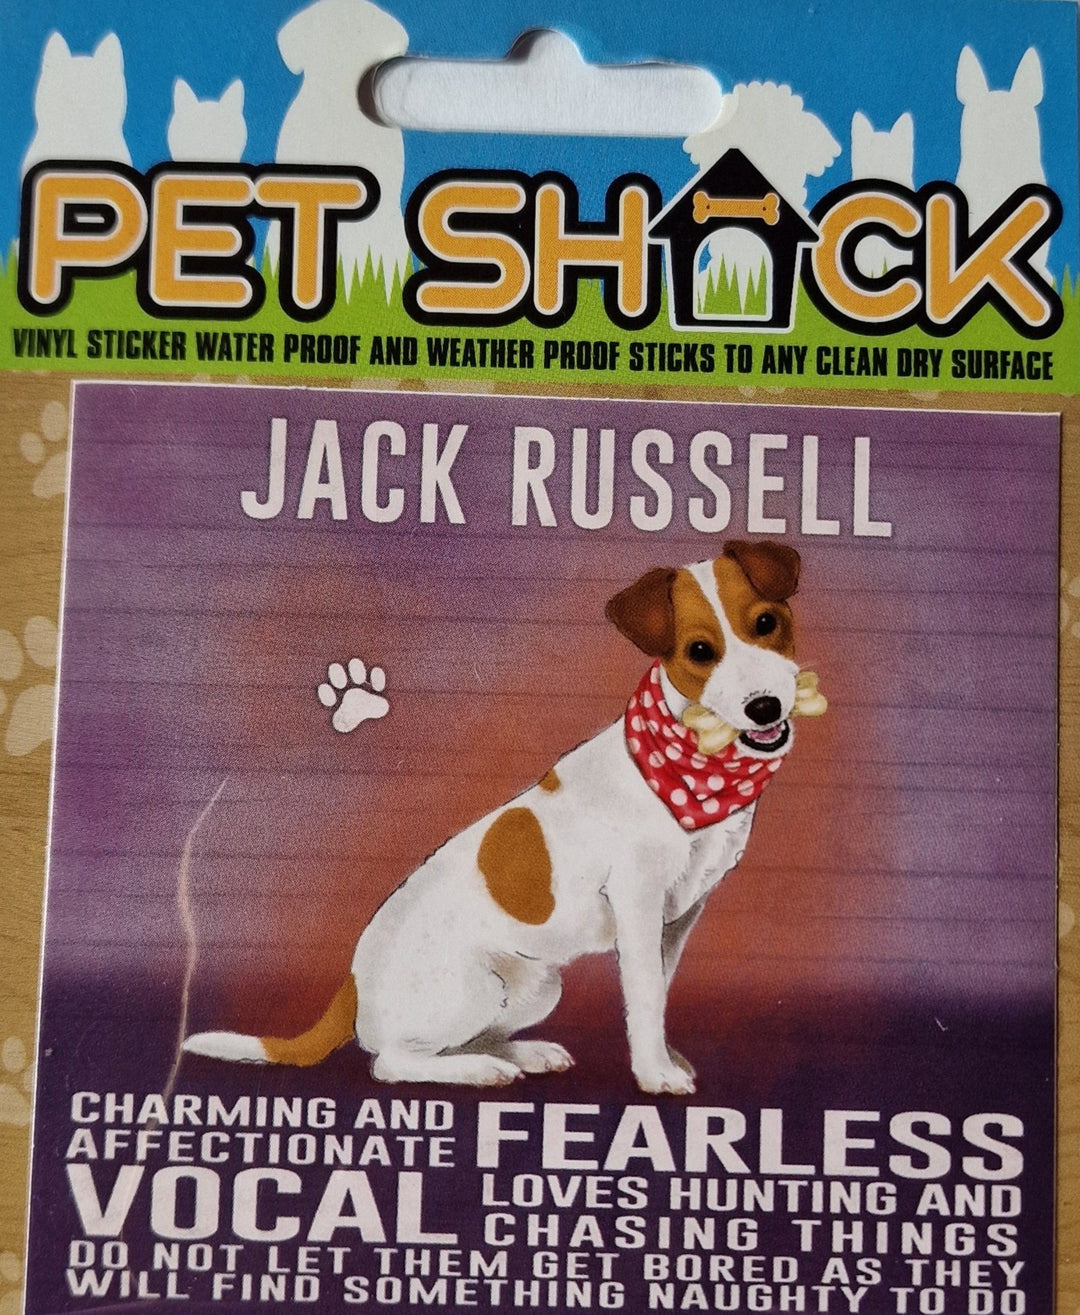 Aufkleber aus der "Pet Shack"- Reihe . "Jack Russell"